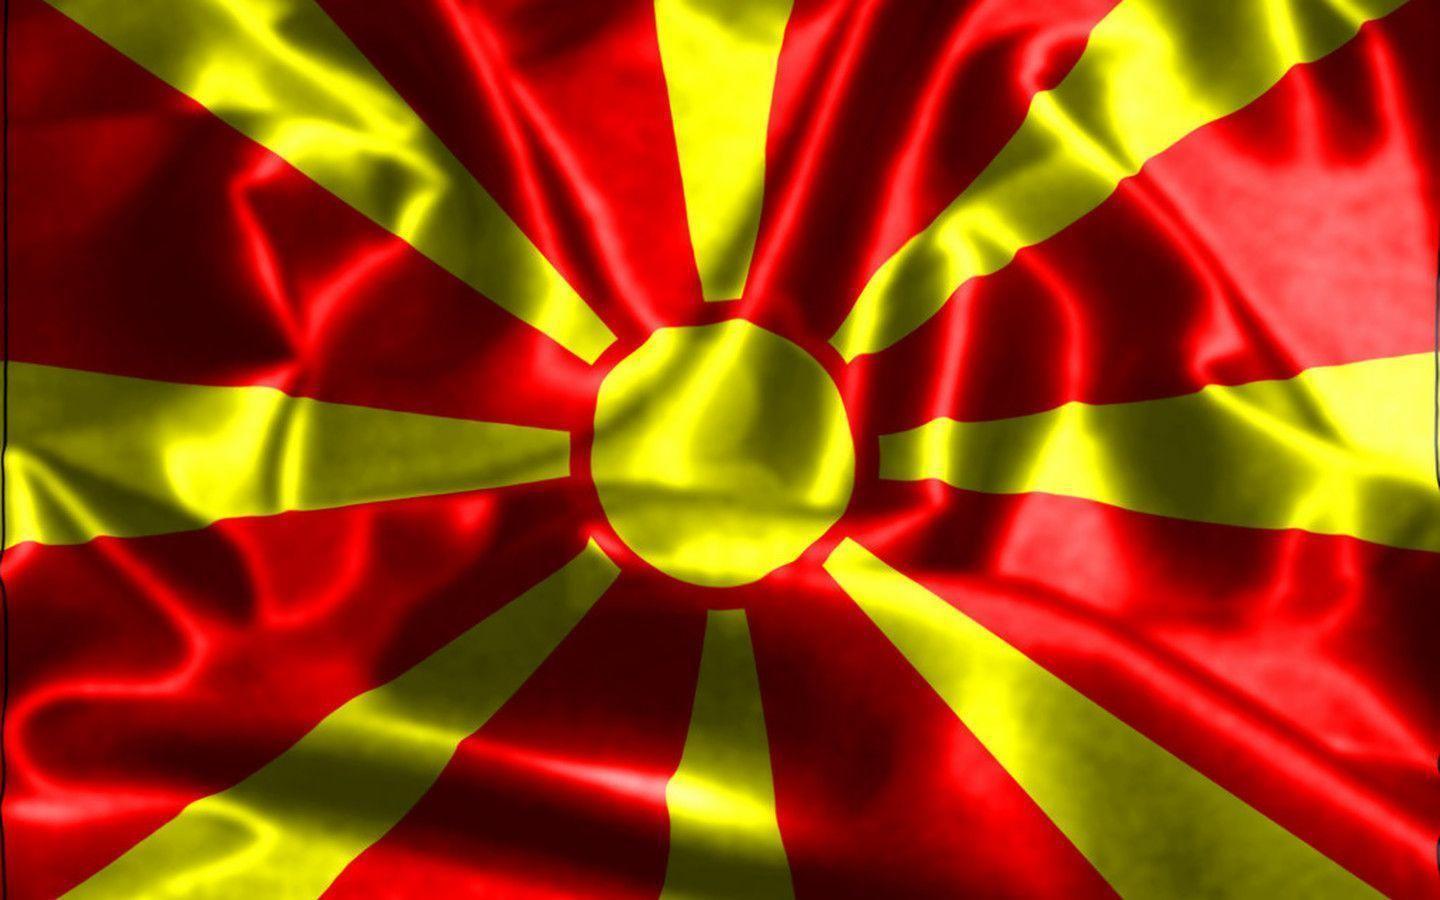 Macedonia is Macedonia ! by akcadag45 on day 052